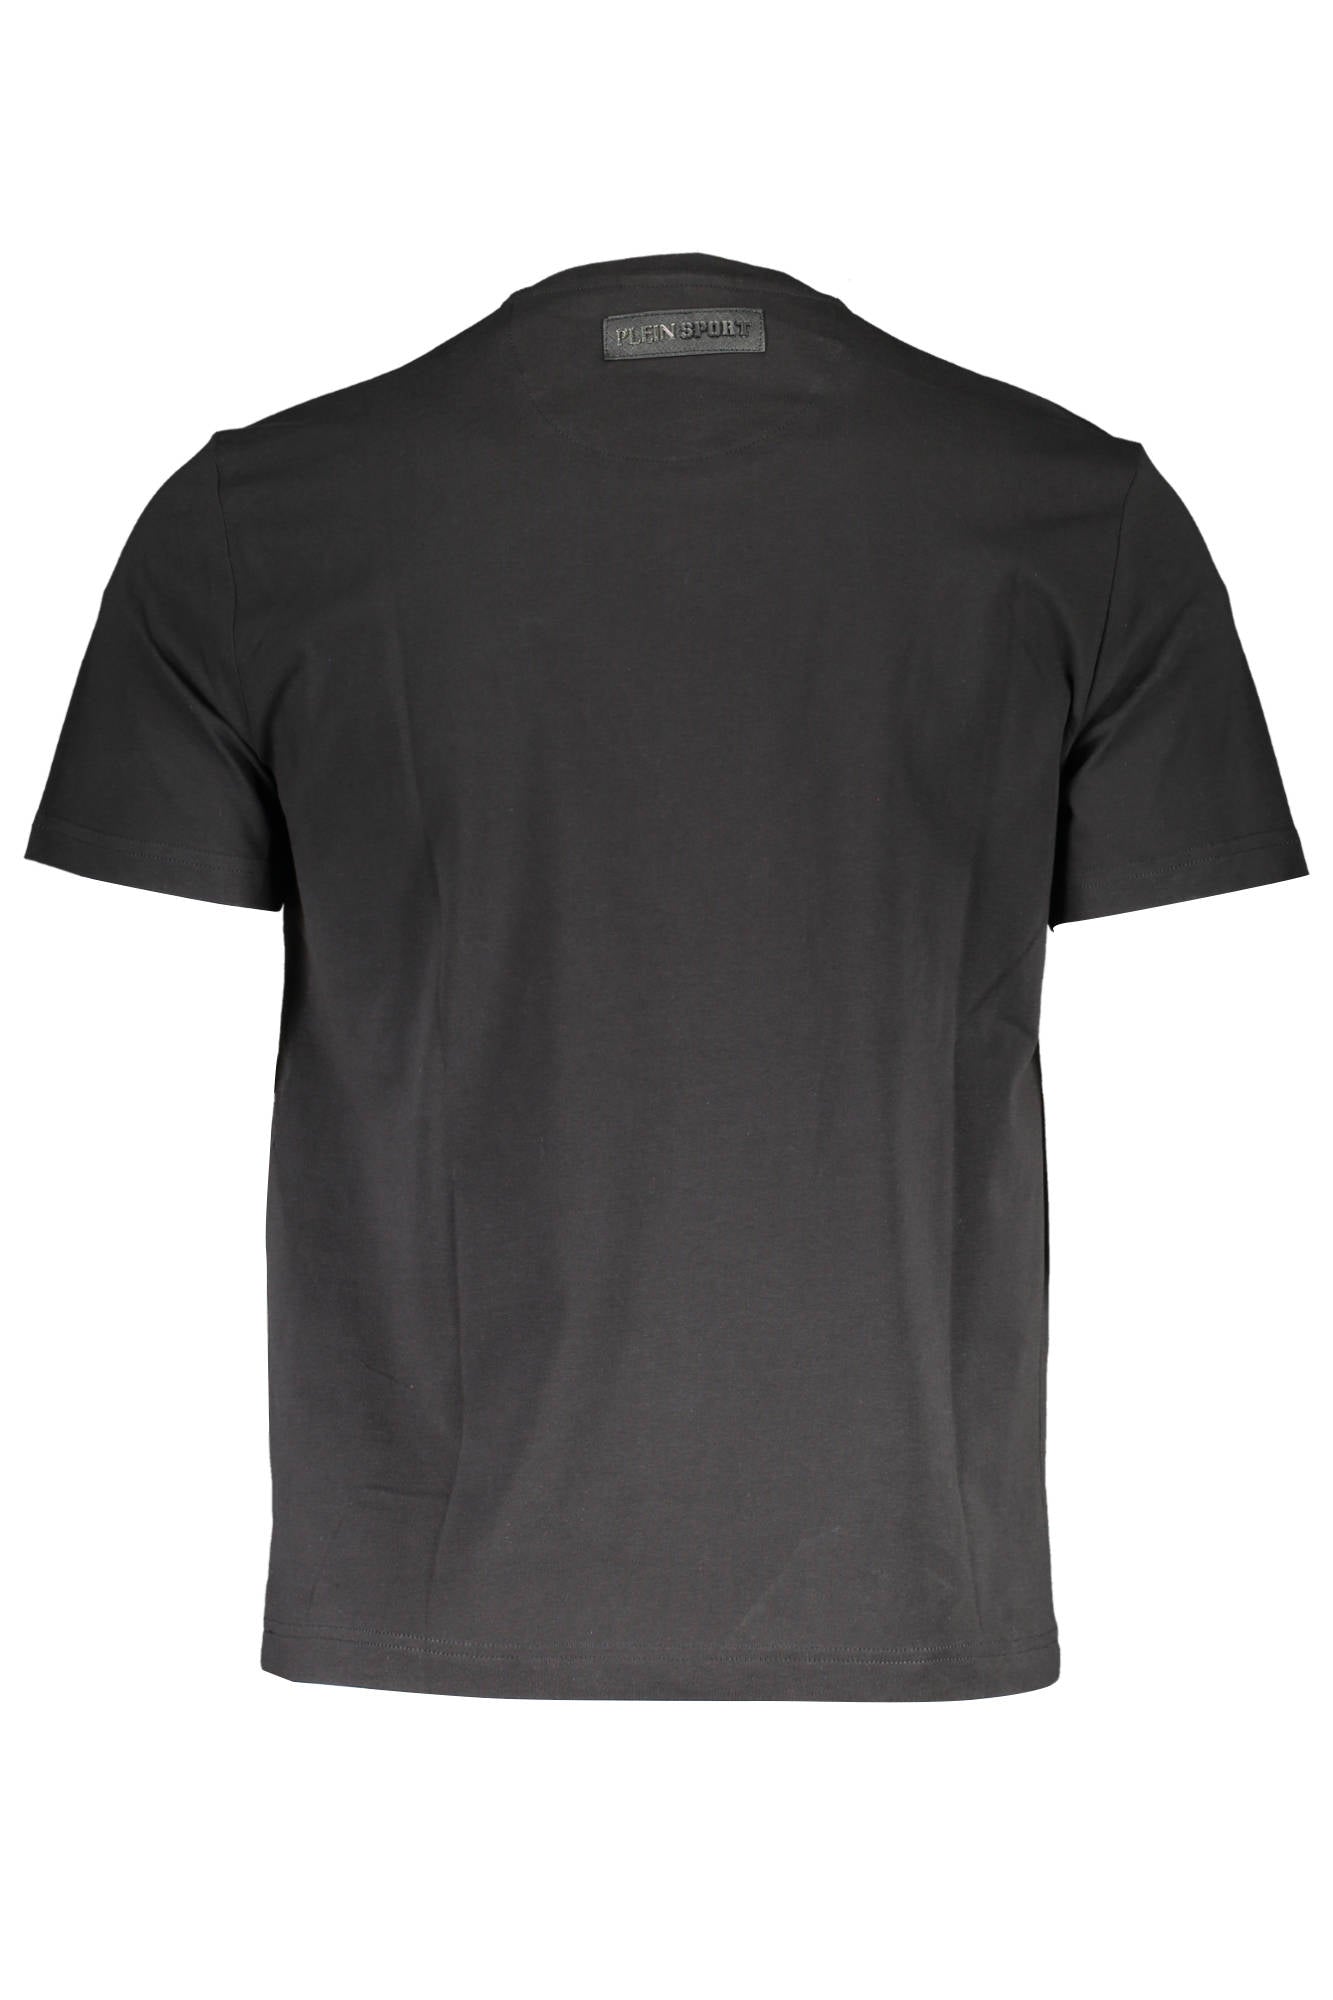 Plein Sport Black T-Shirt - Fizigo